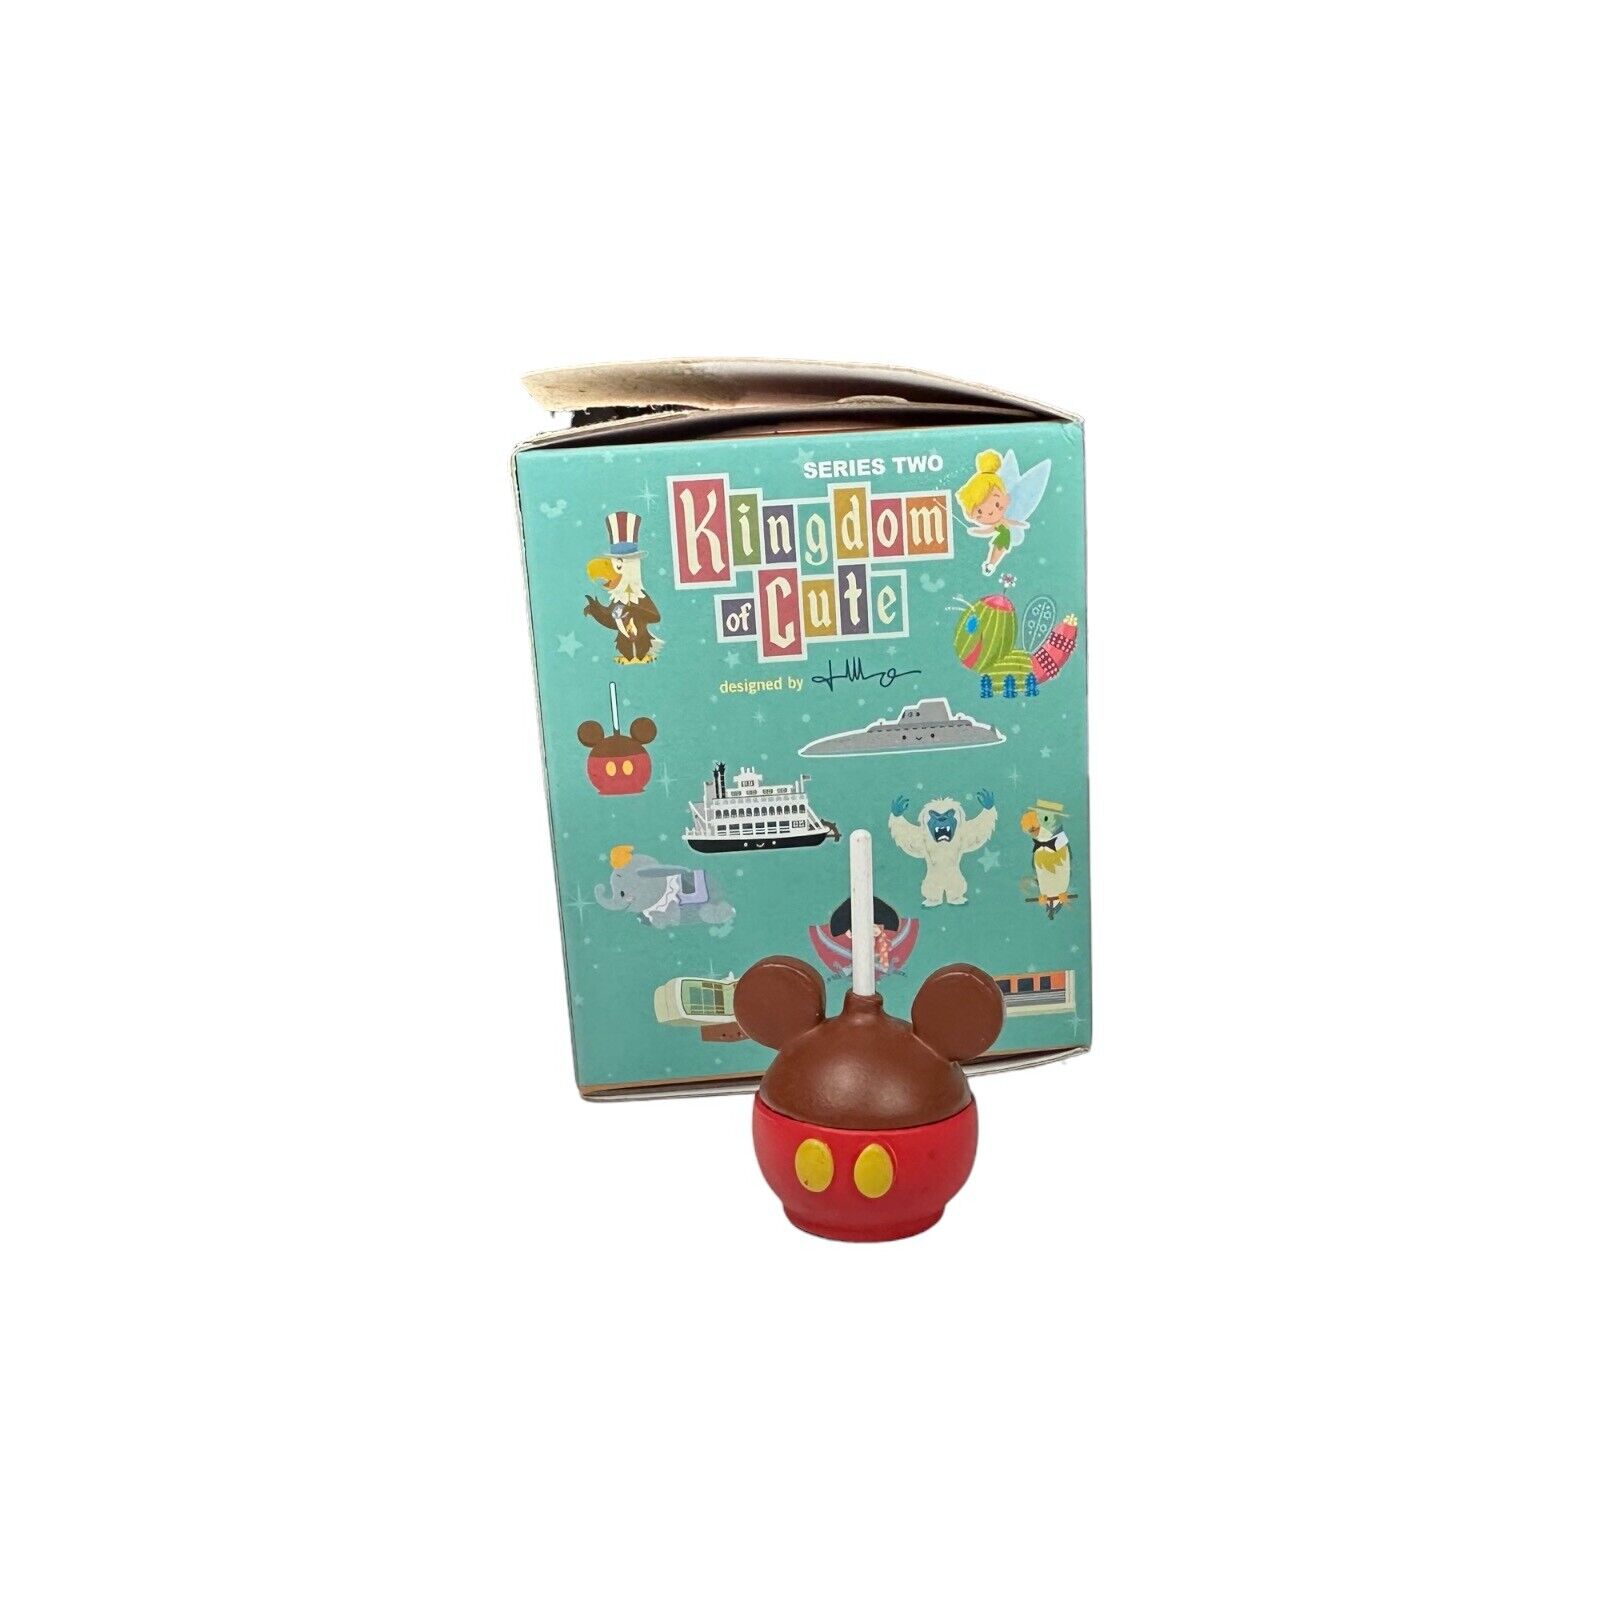 2018 Disney Parks Kingdom of Cute Series 2 Vinylmation - Mickey Candy Apple